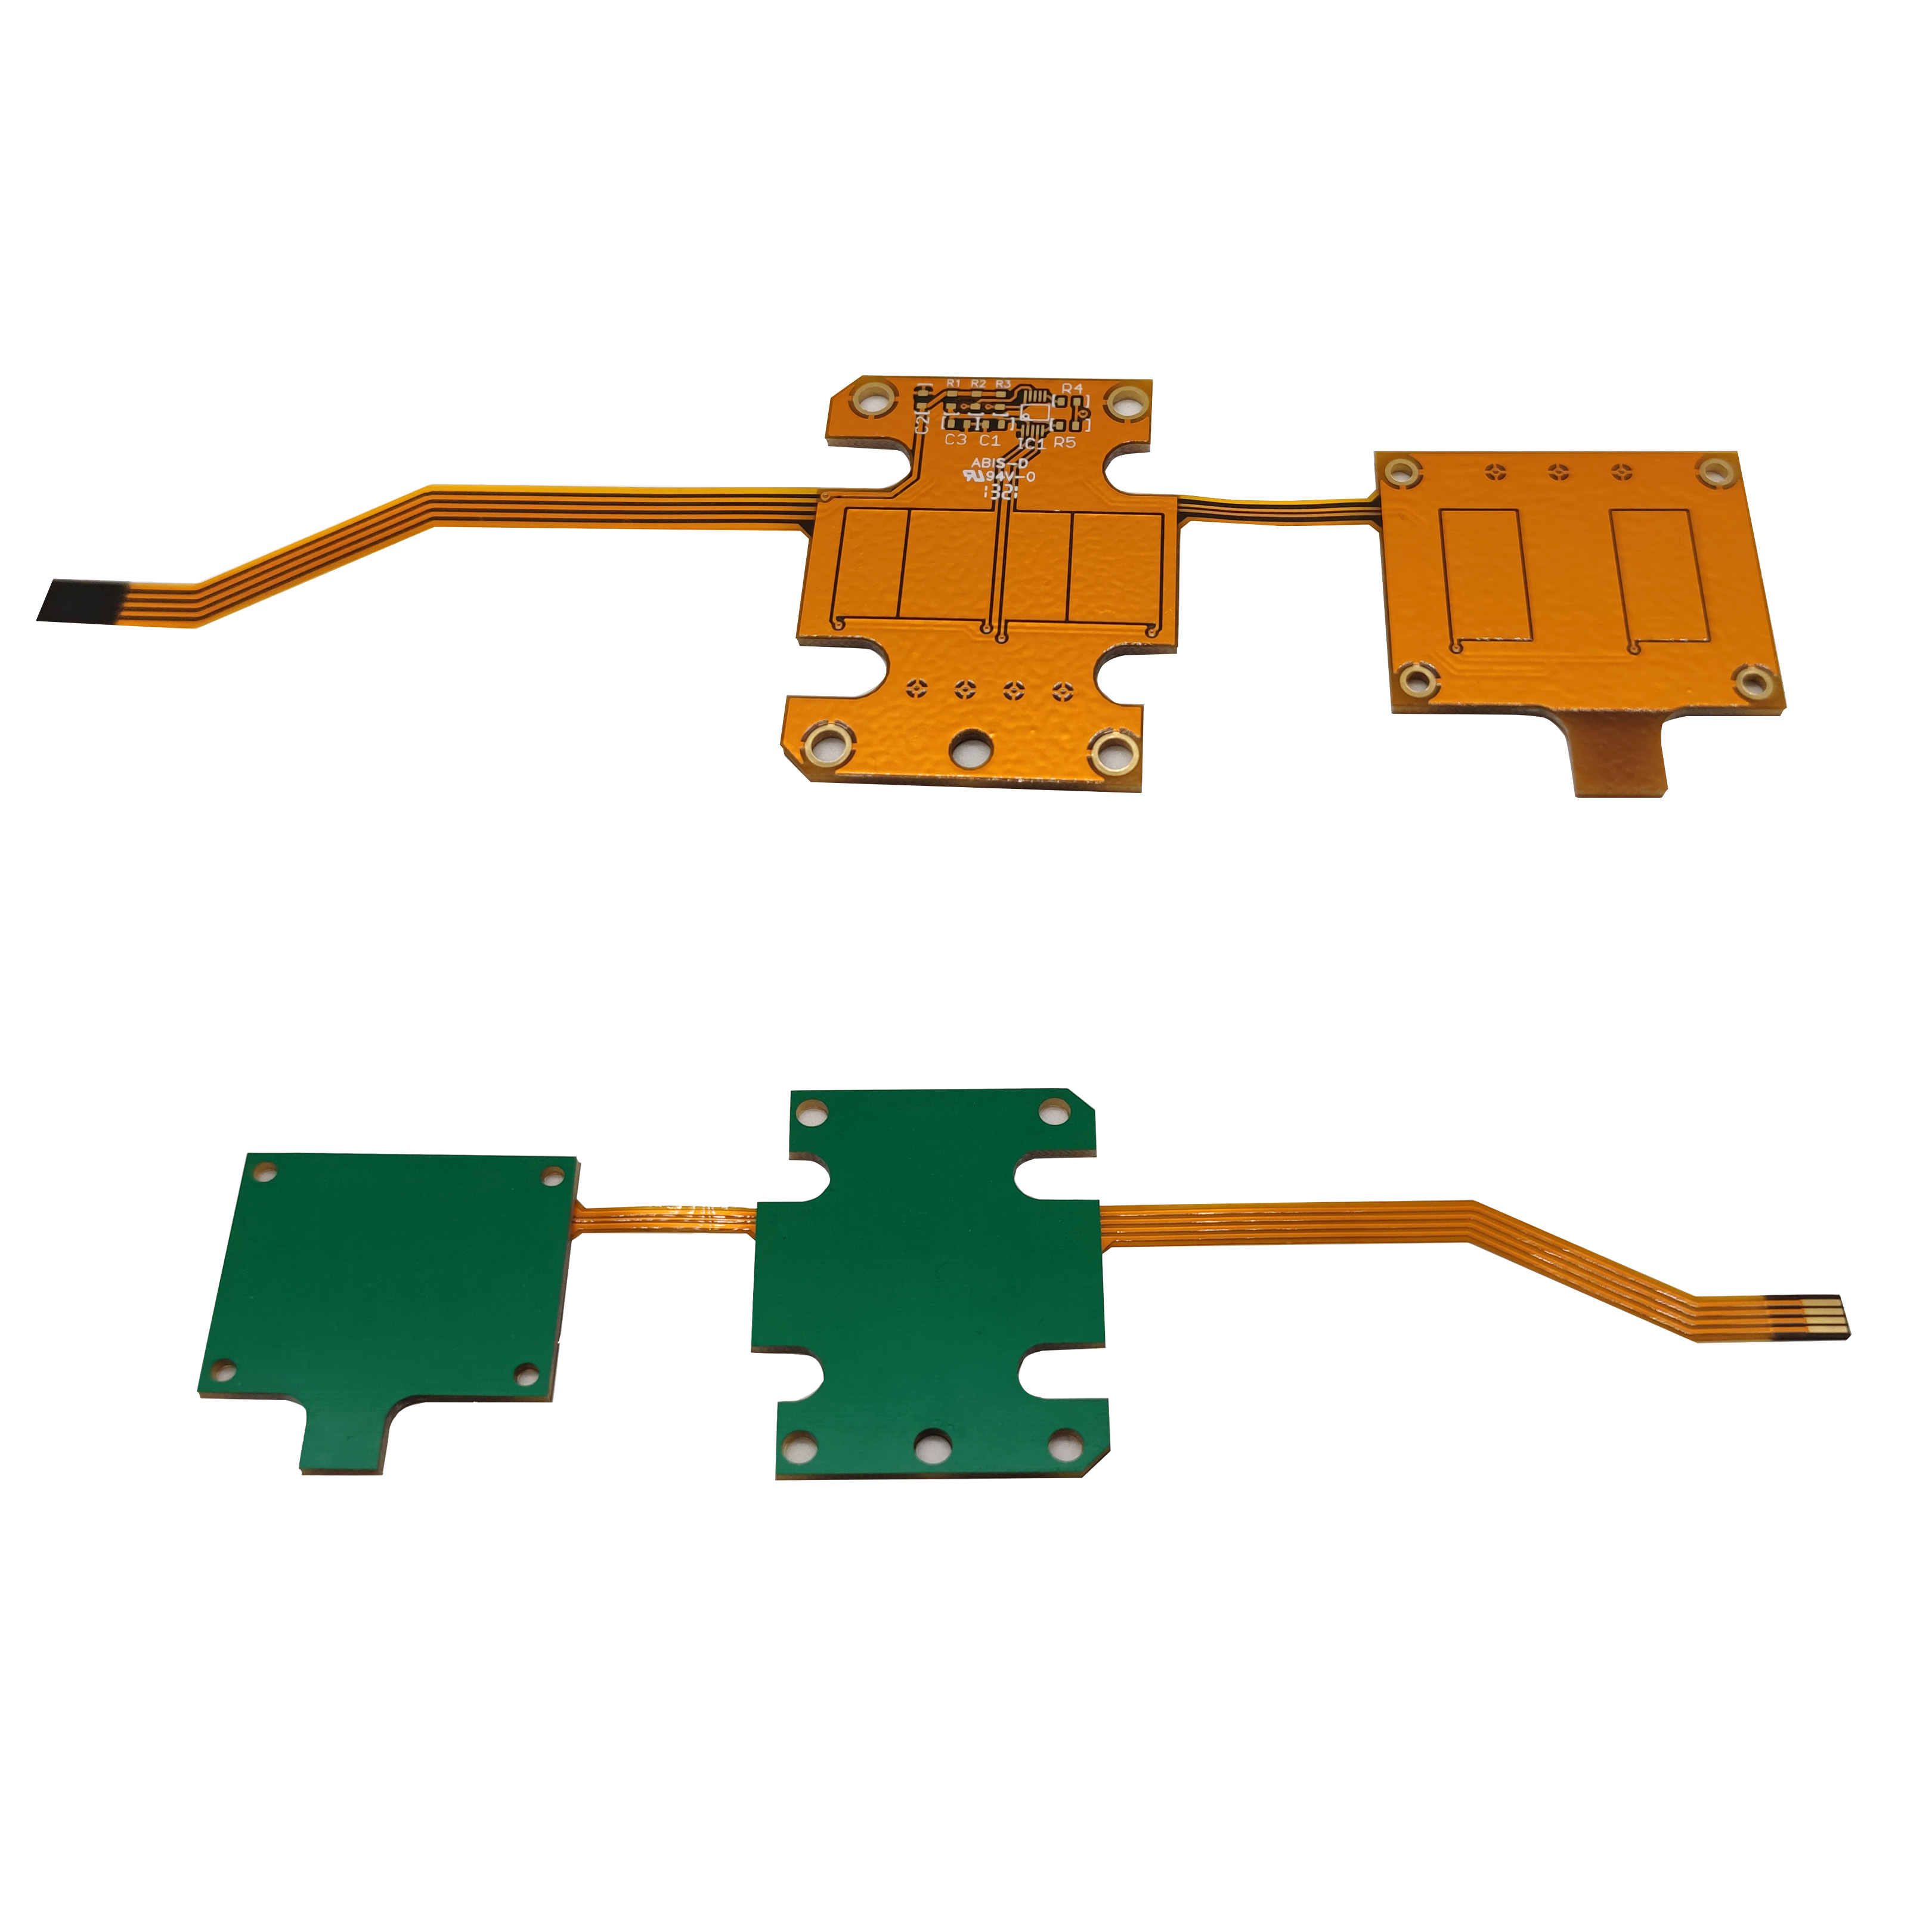 2 lapisan Adat PI Stiffeners fléksibel dicitak Circuit Boards Gambar Diulas PCBs